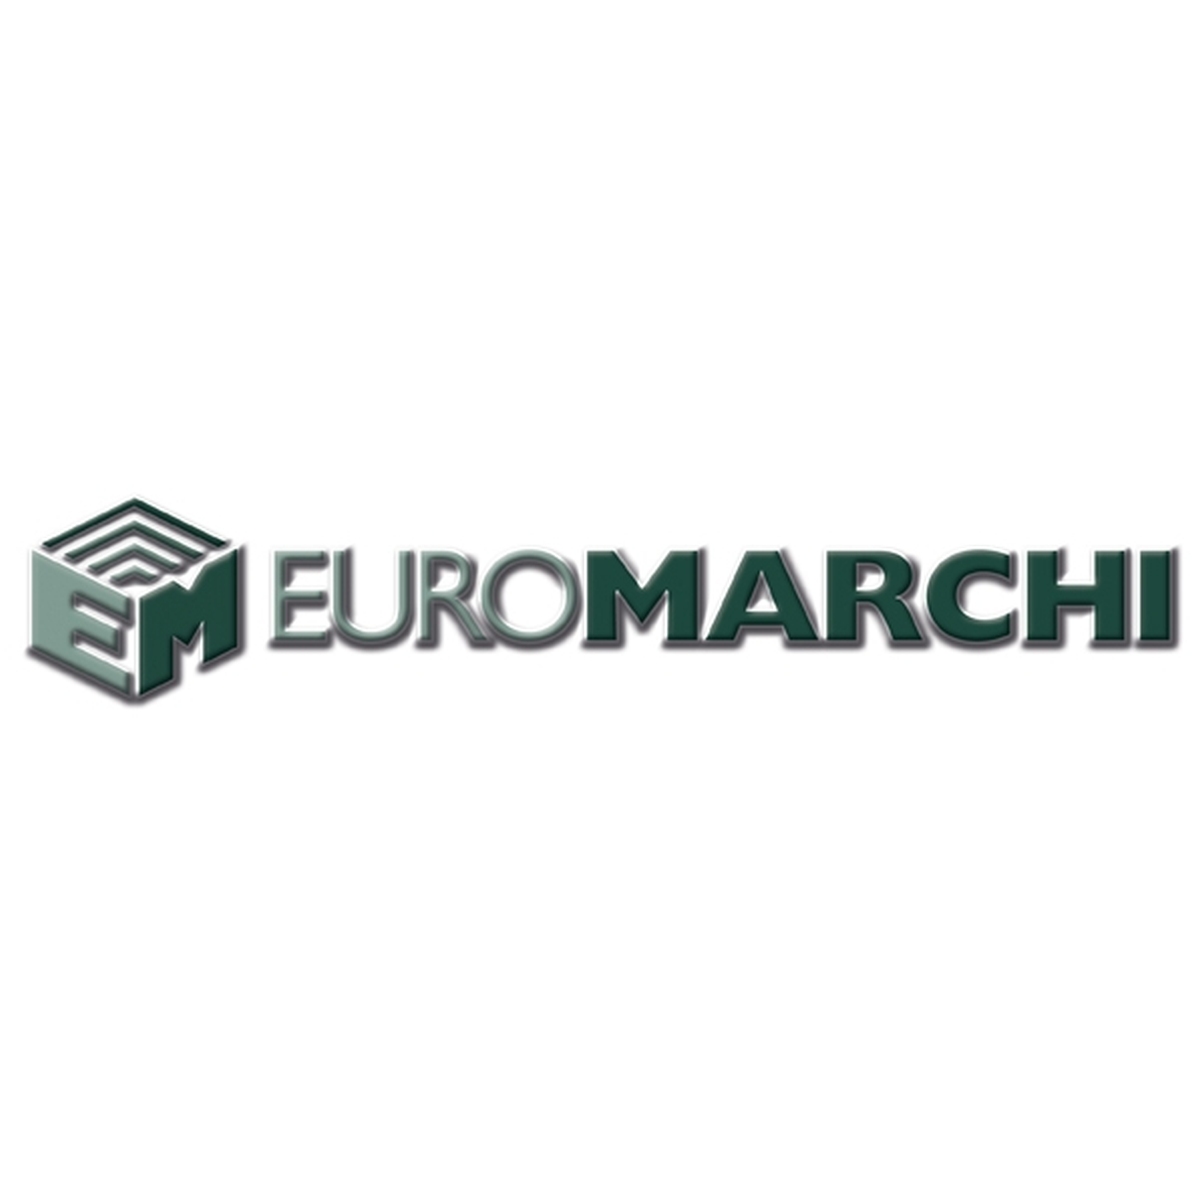 Euromarchi